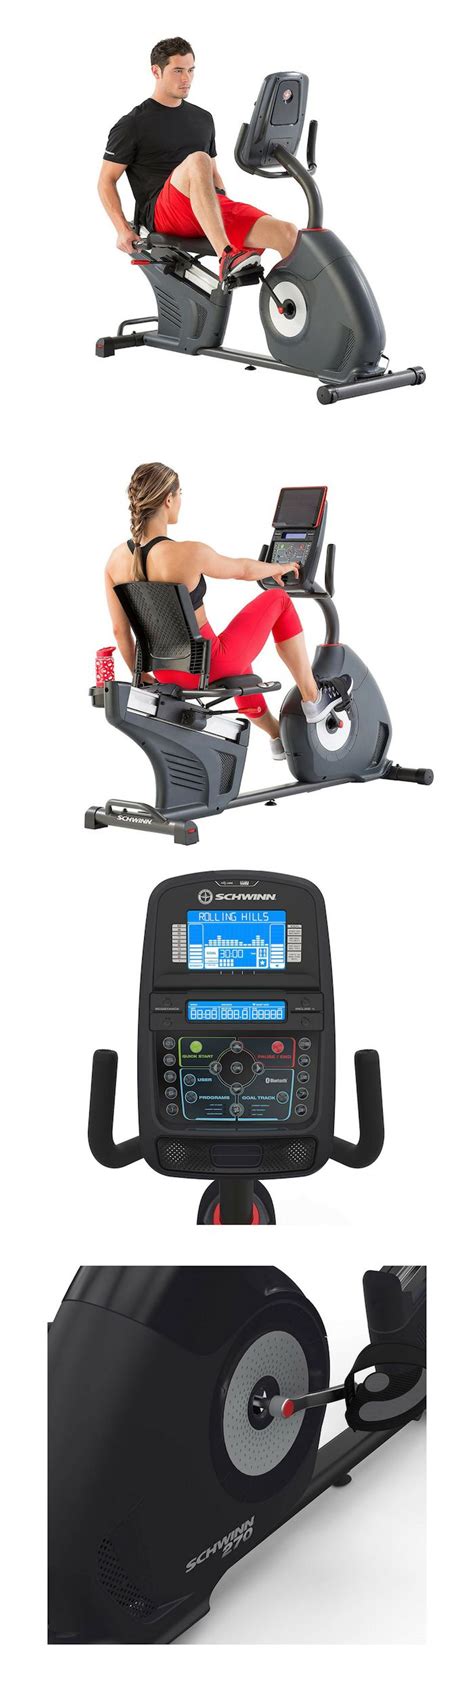 With the schwinn® 270 recumbent bike, cardio workouts are anything but routine. With the Schwinn 270 Recumbent Bike, cardio workouts are ...